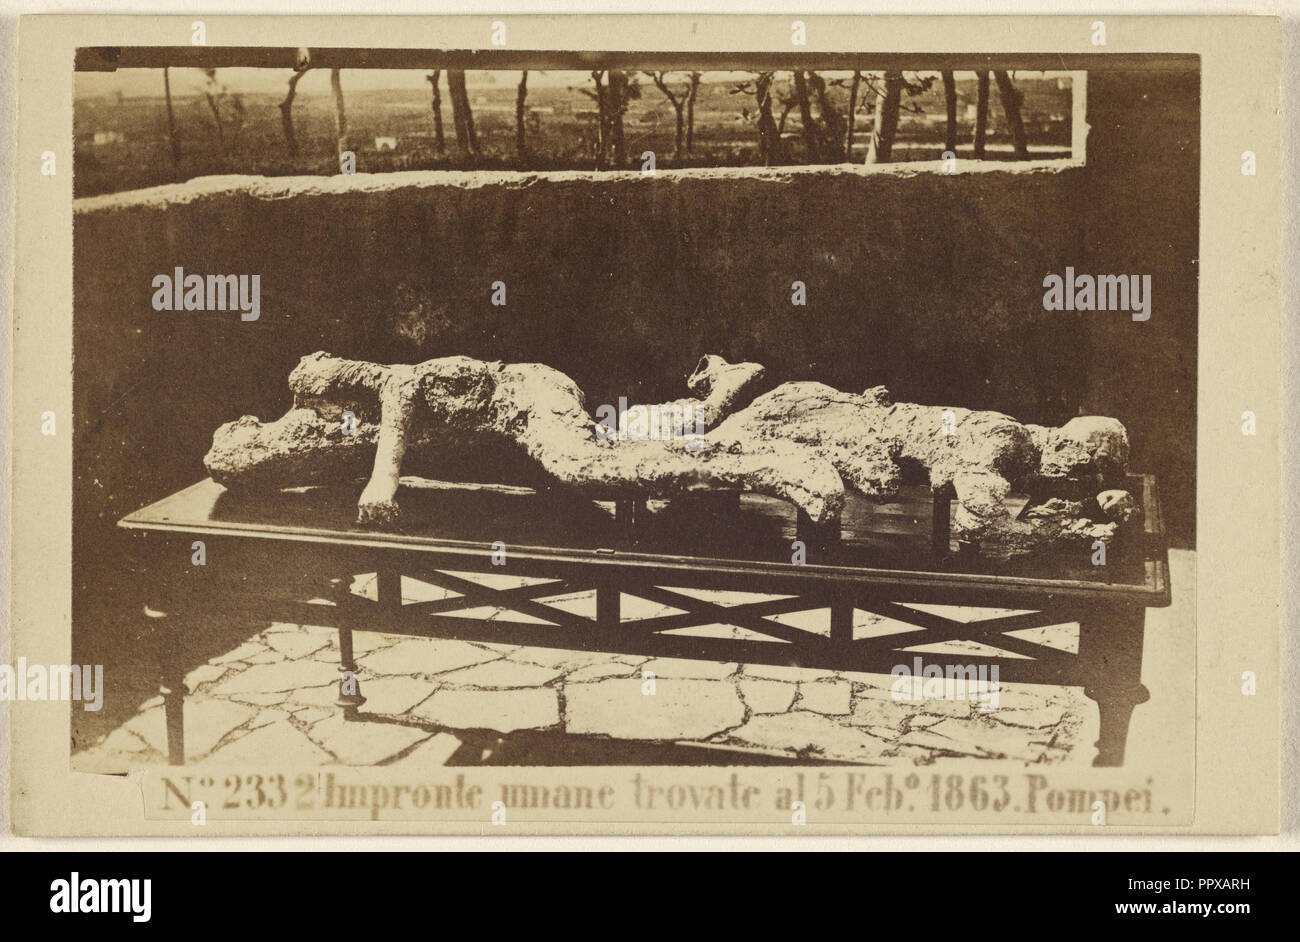 Impronte mnane trovate al 5 febbraio 1863. Pompei; Sommer & Behles, Italiano, 1867 - 1874, Febbraio 3, 1863; albume silver stampa Foto Stock